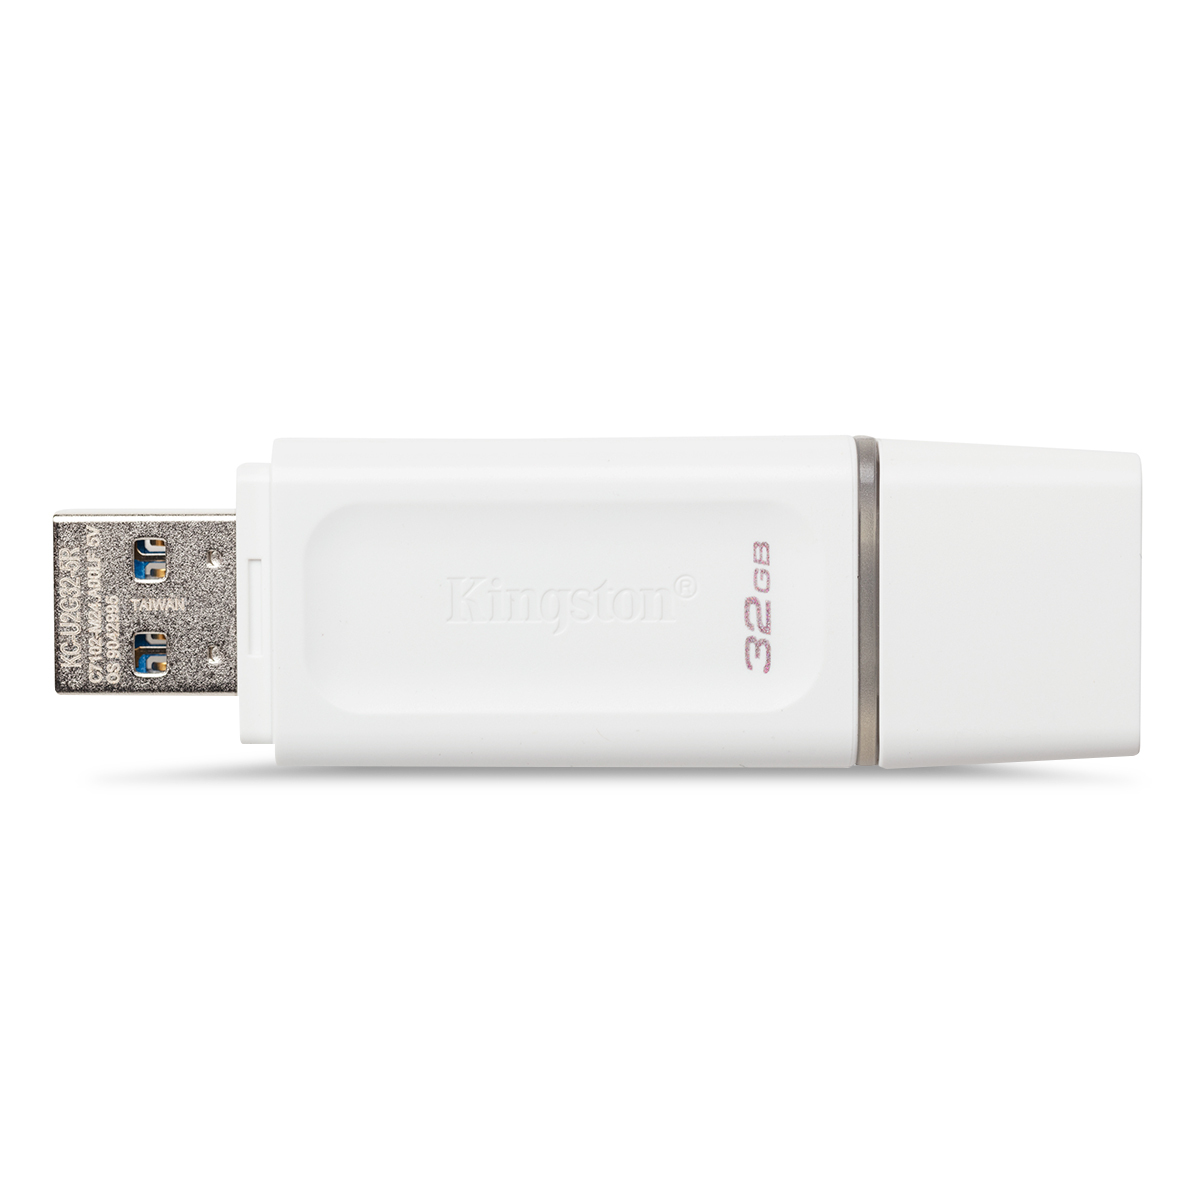 USB 32 GB BLANCO  KINGSTON FLASH DRIVE  | Office Depot Costa Rica